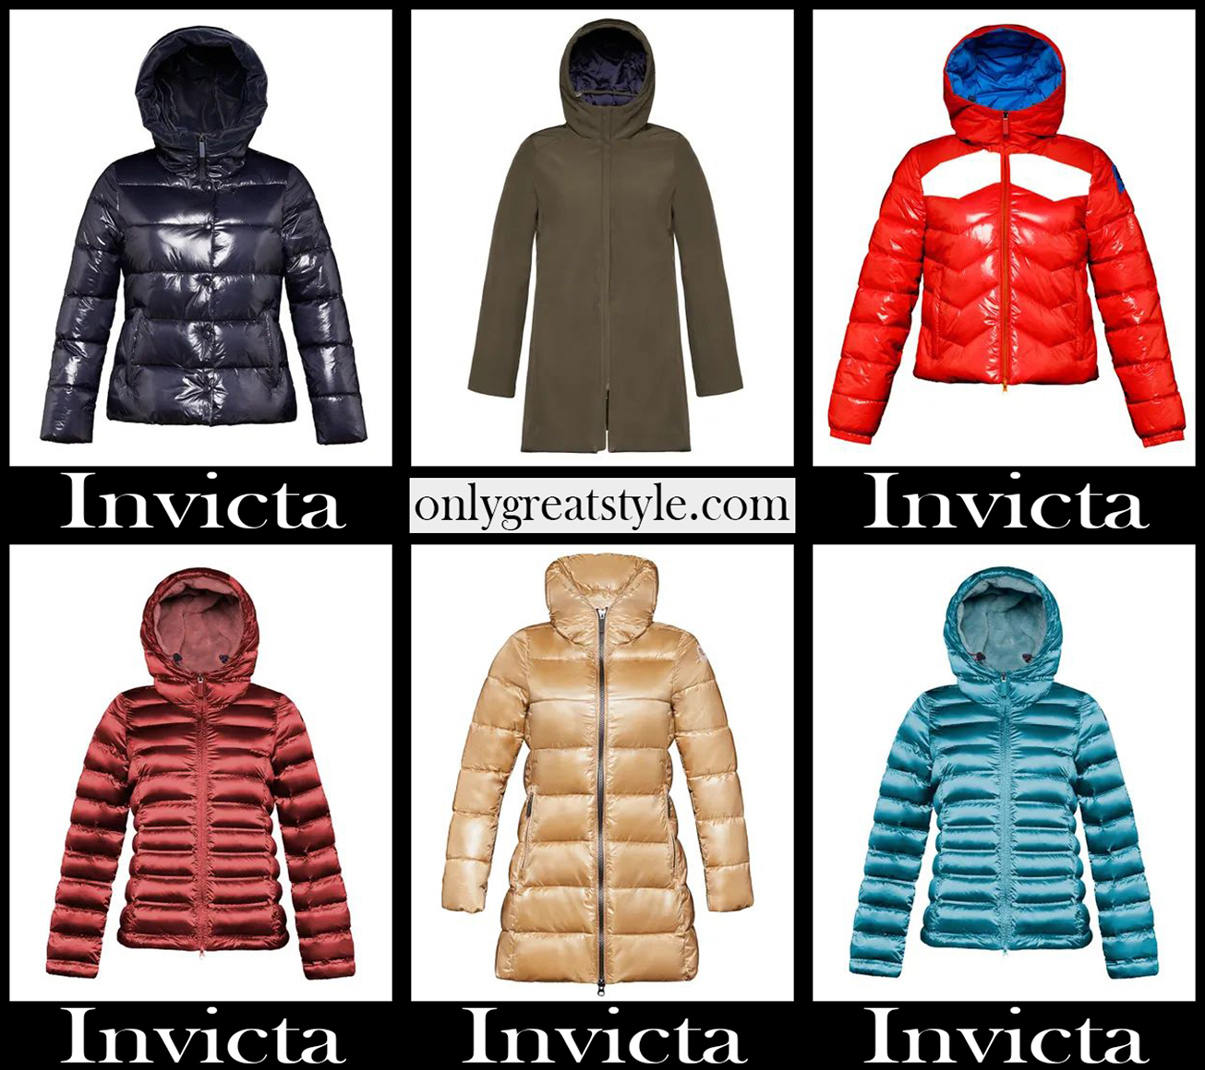 Invicta jackets 20-2021 fall winter women's clothing